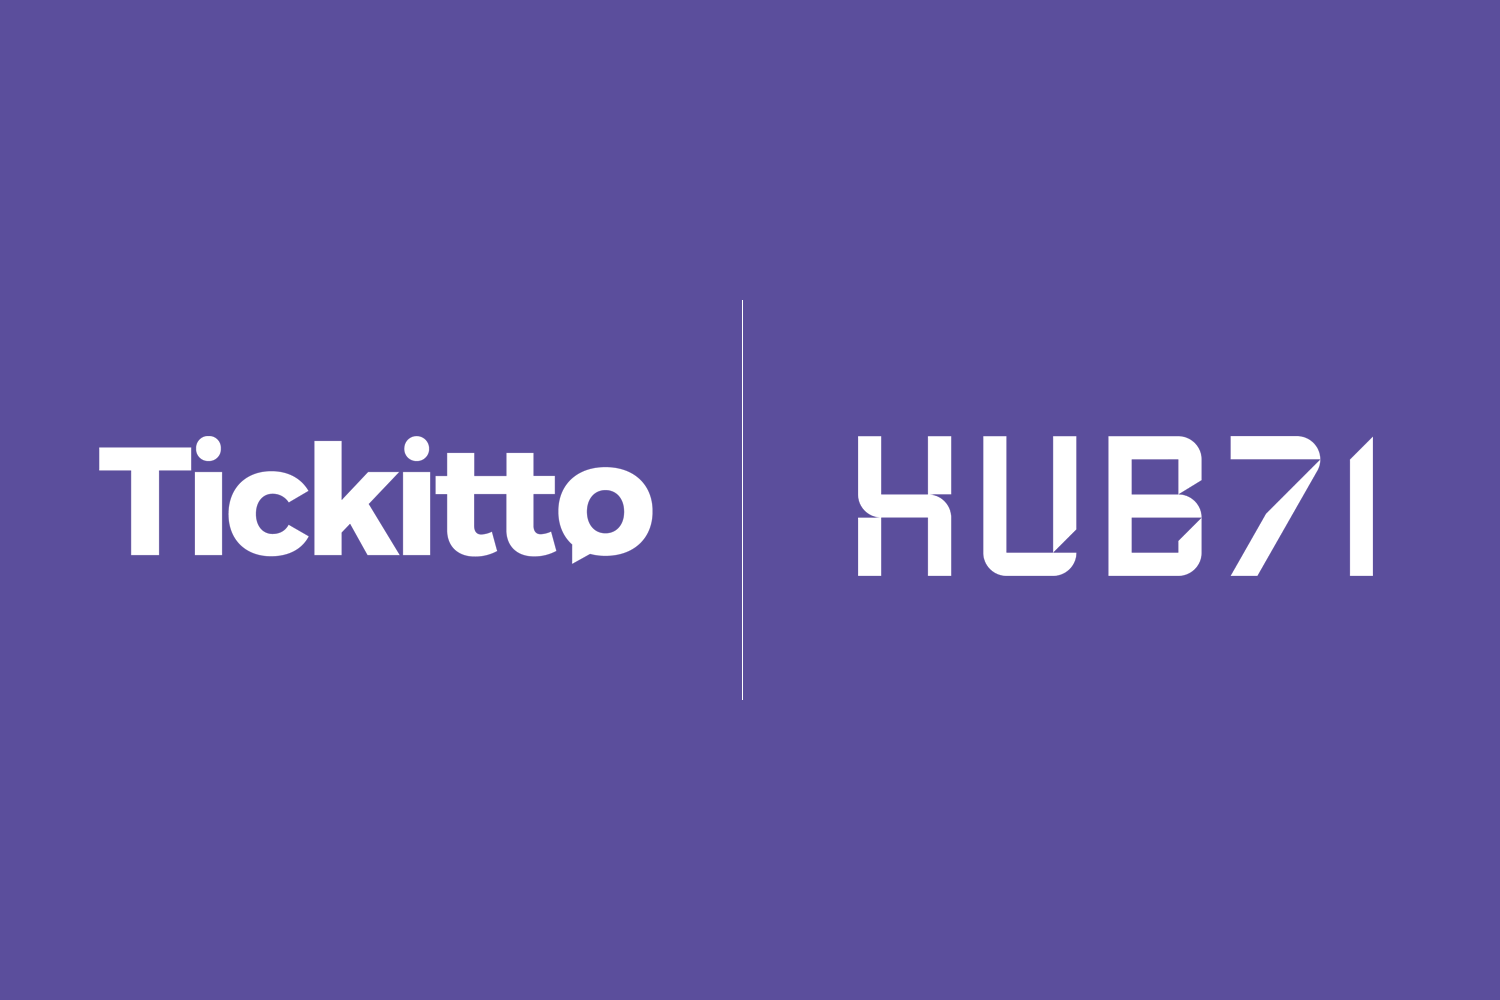 ticktito logo next to hub71 logo